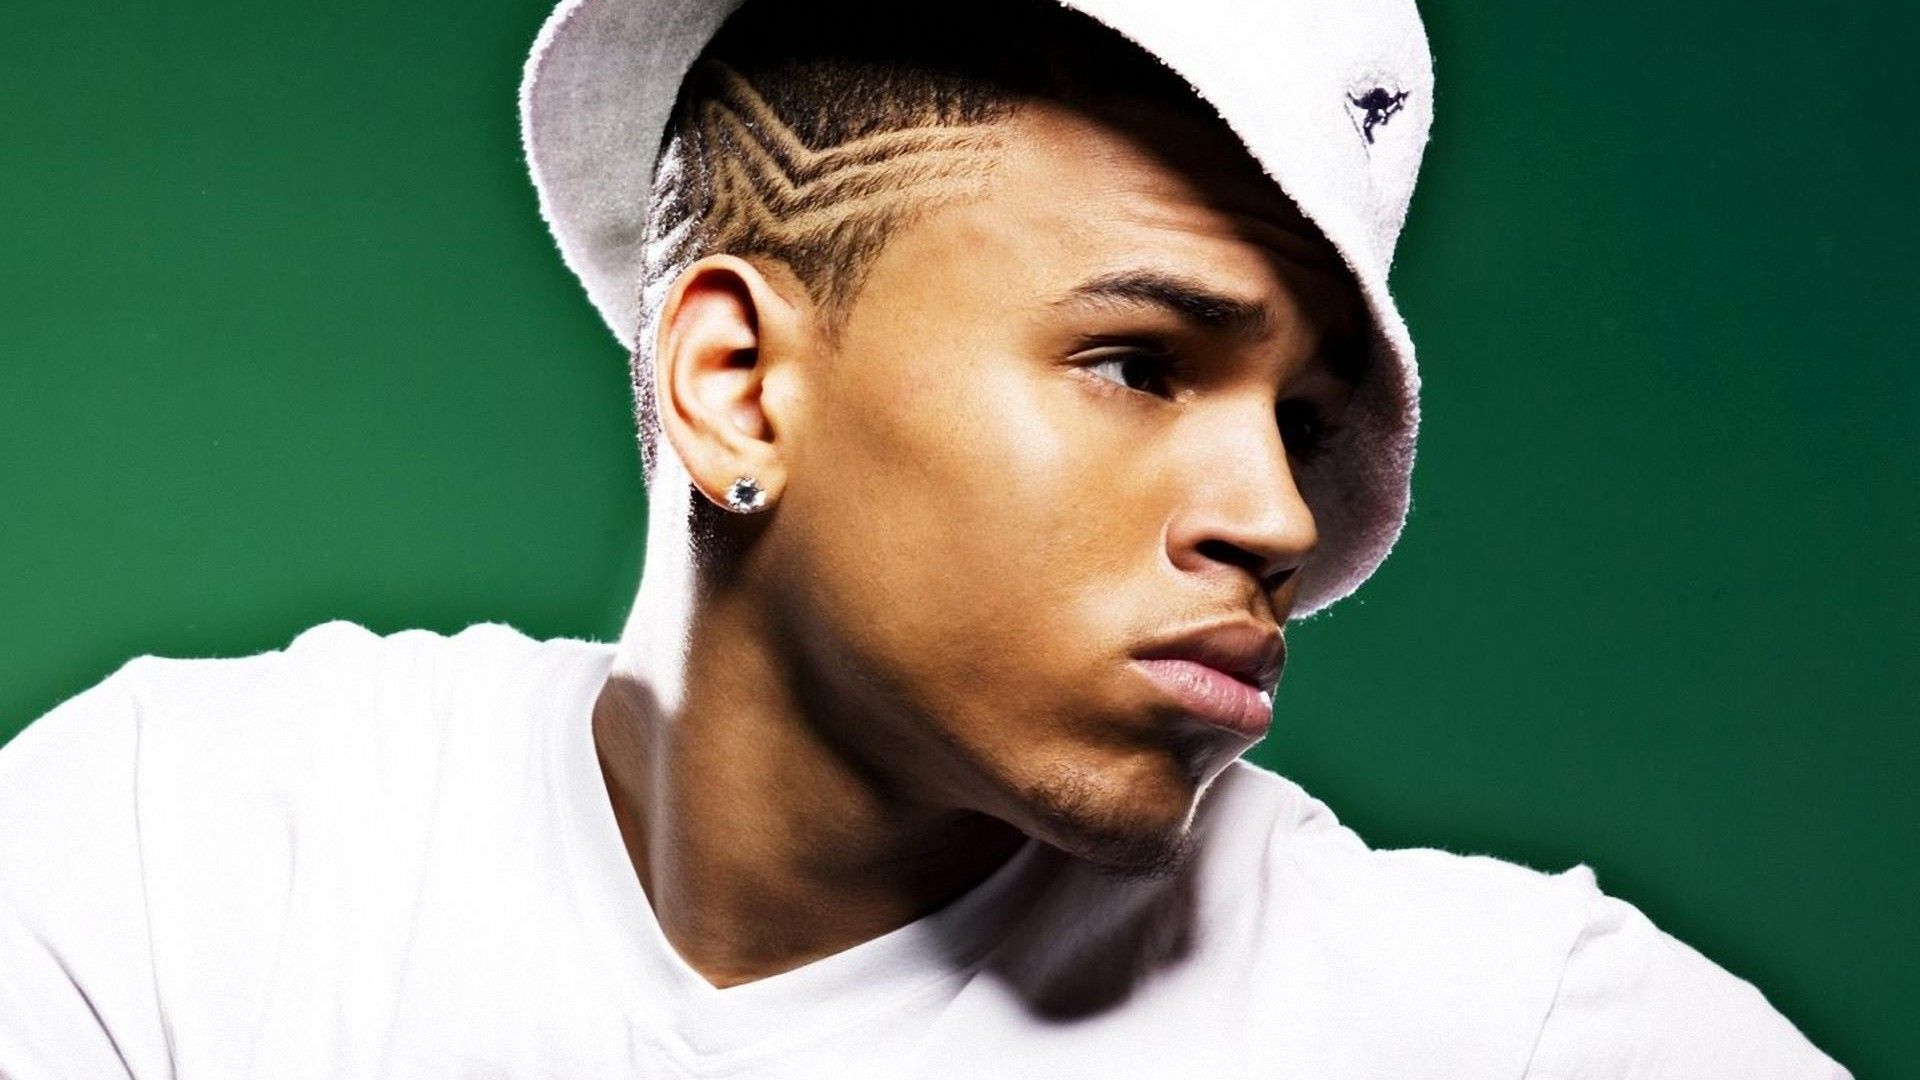 Chris Brown White Background